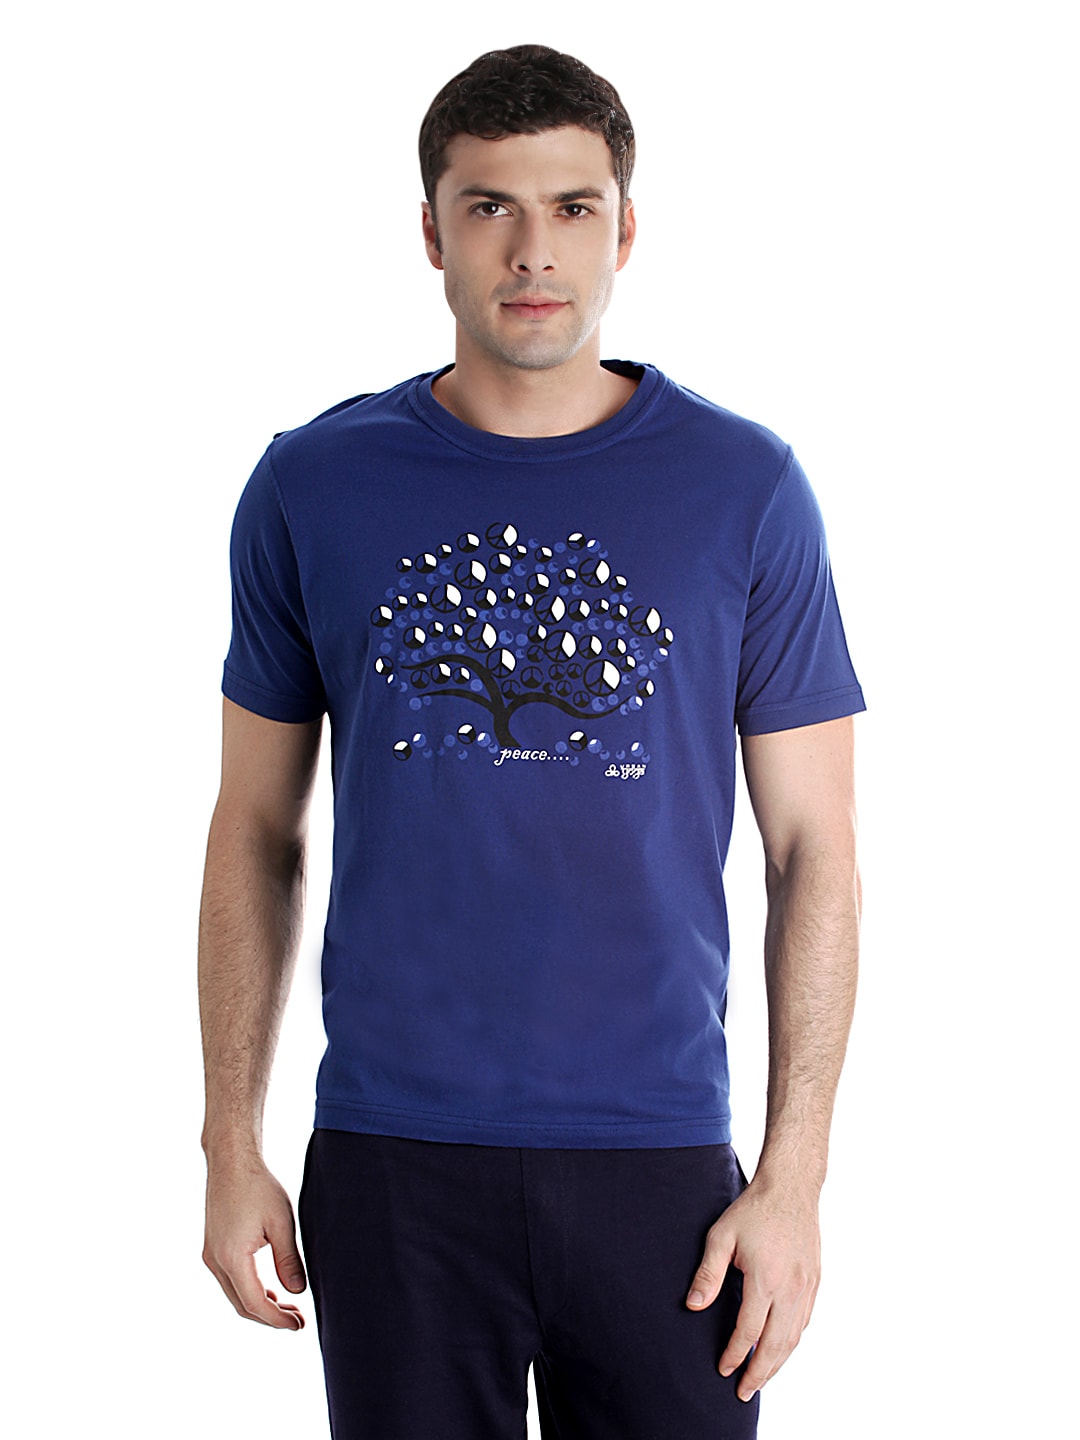 Urban Yoga Men Printed Navy Blue T-shirt